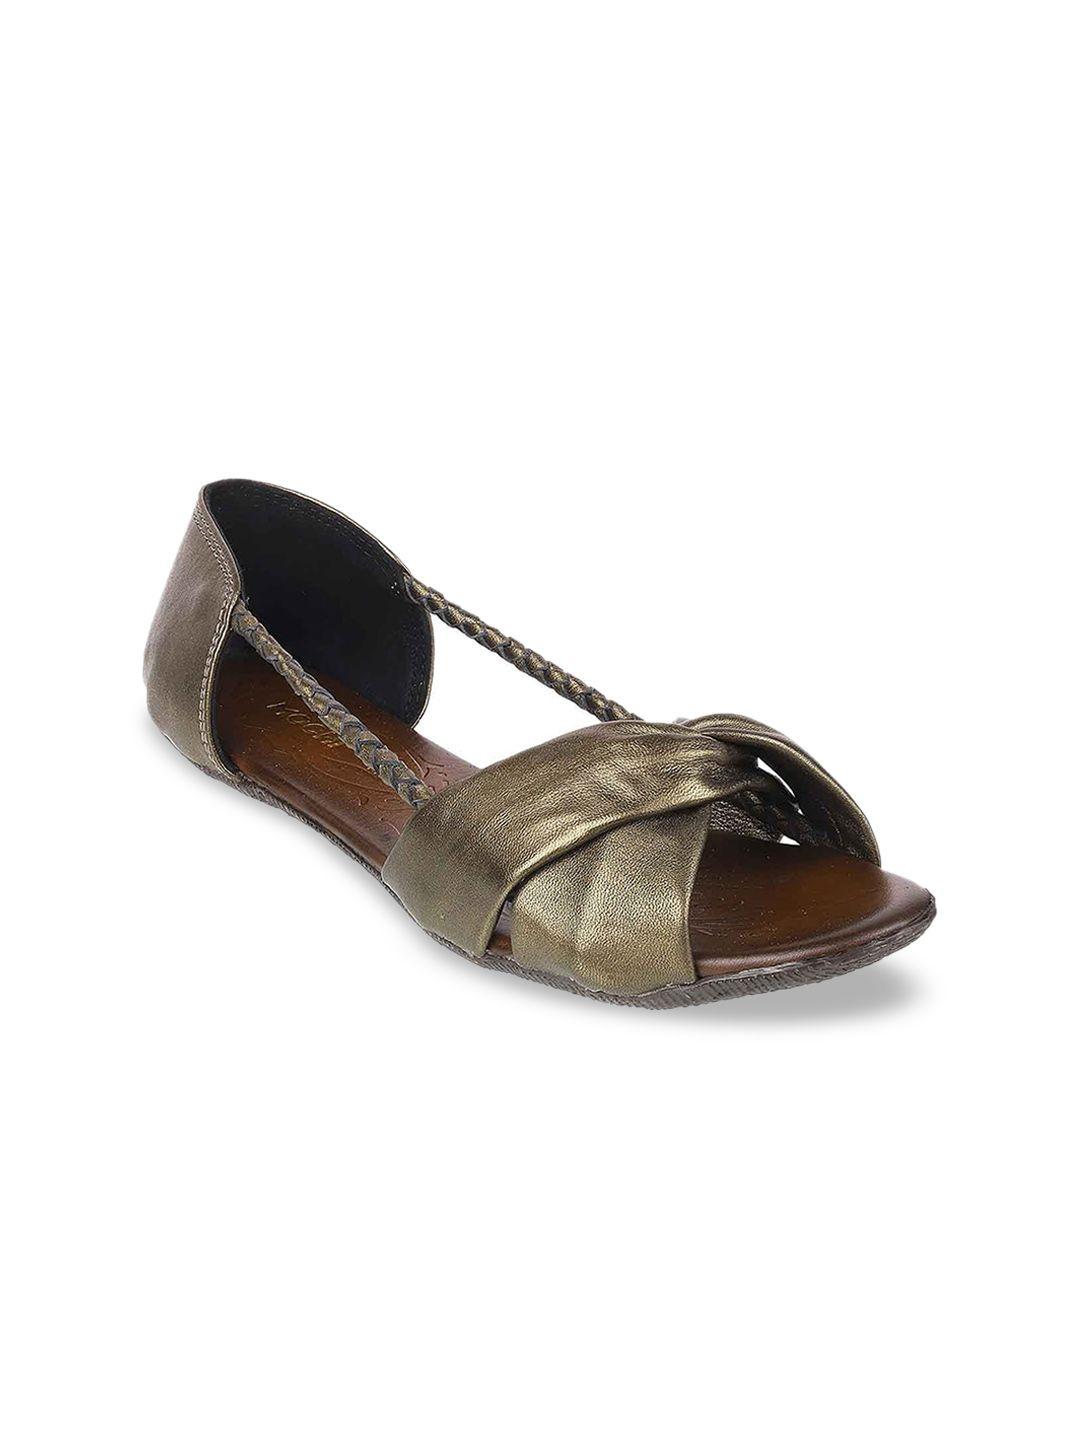 mochi women gold-toned leather open toe flats